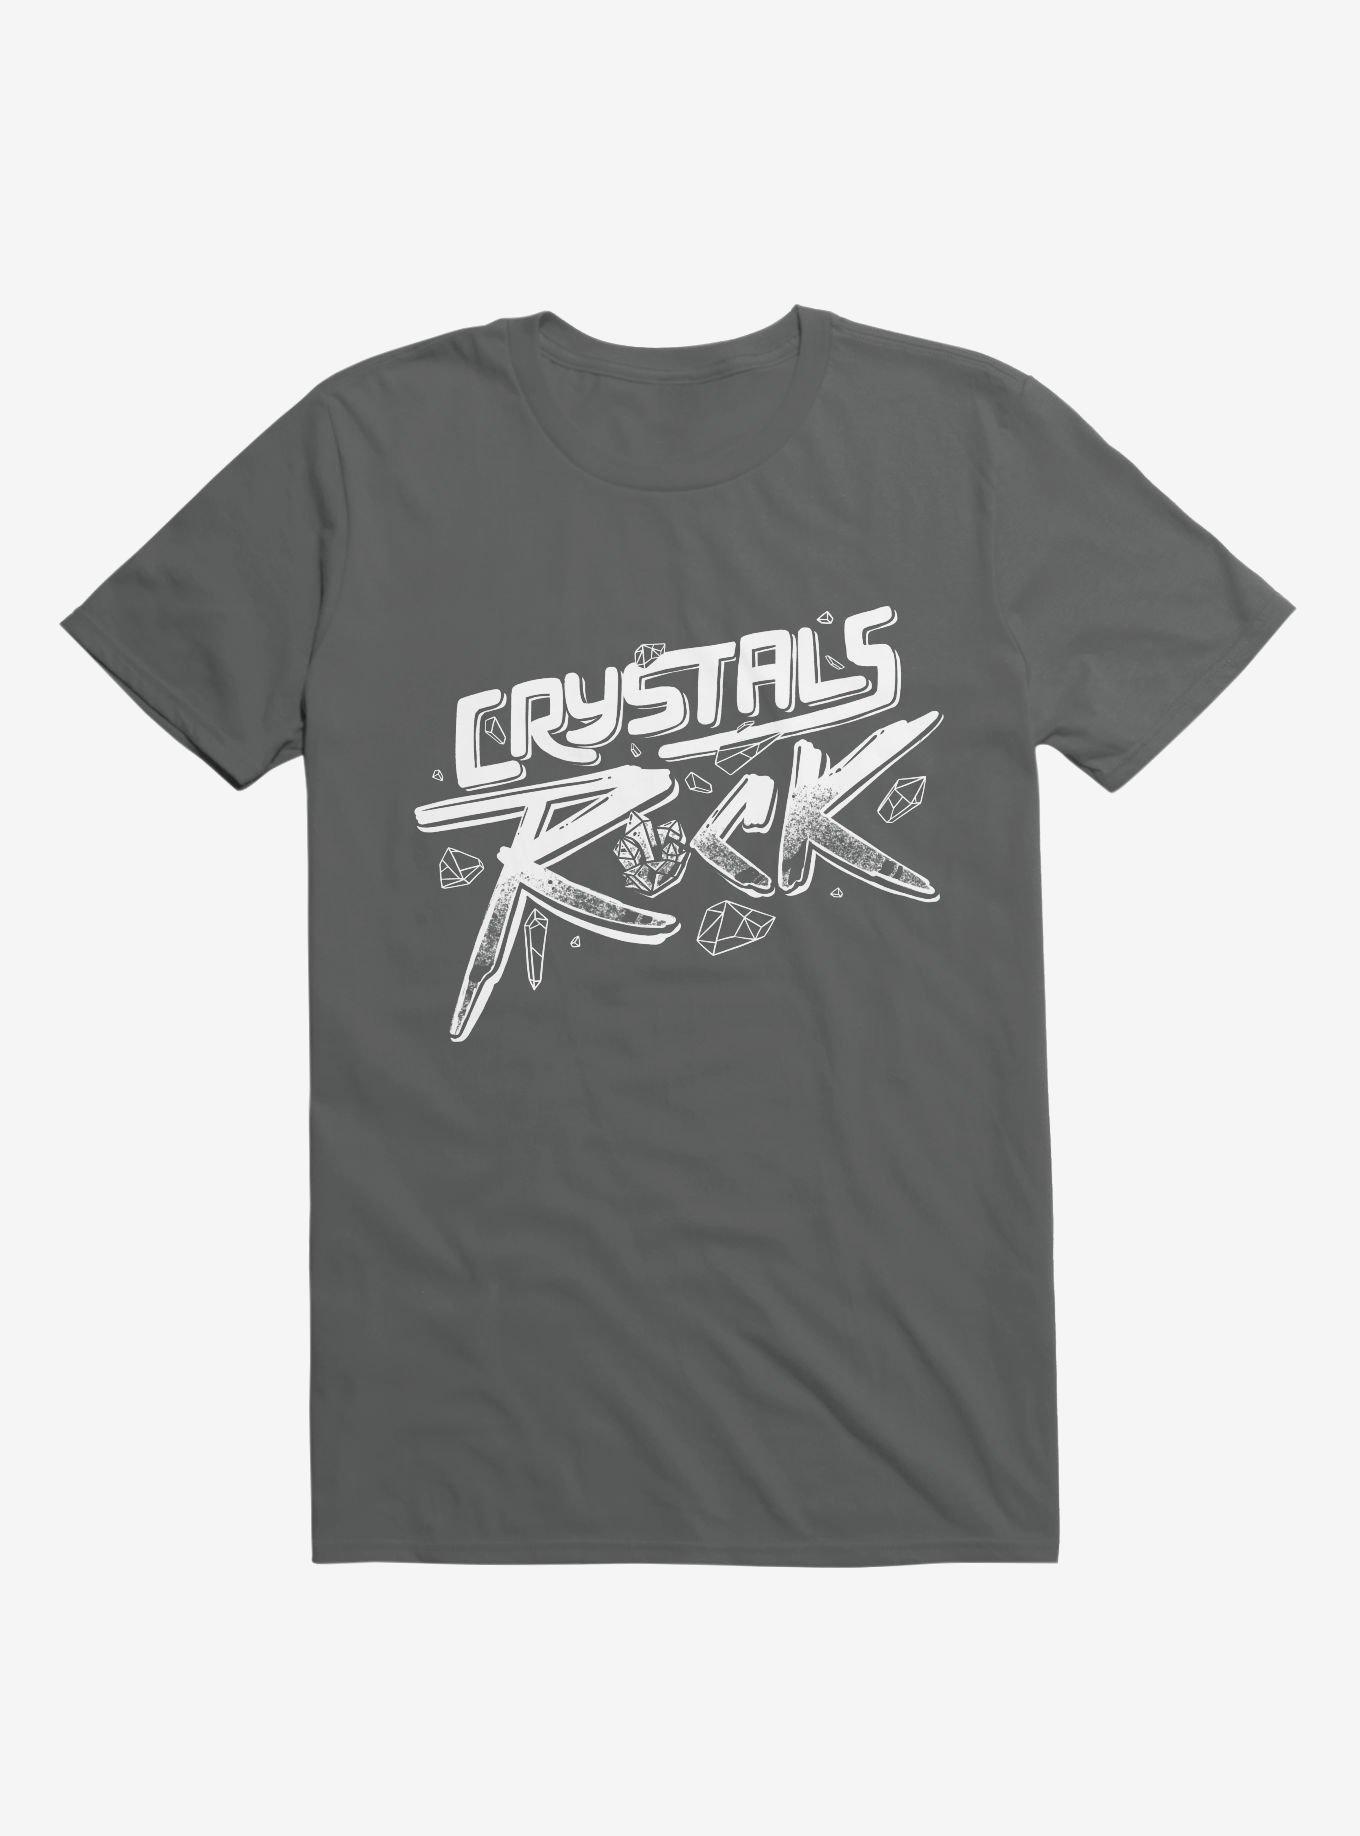 Crystals ROCK! Charcoal Grey T-Shirt